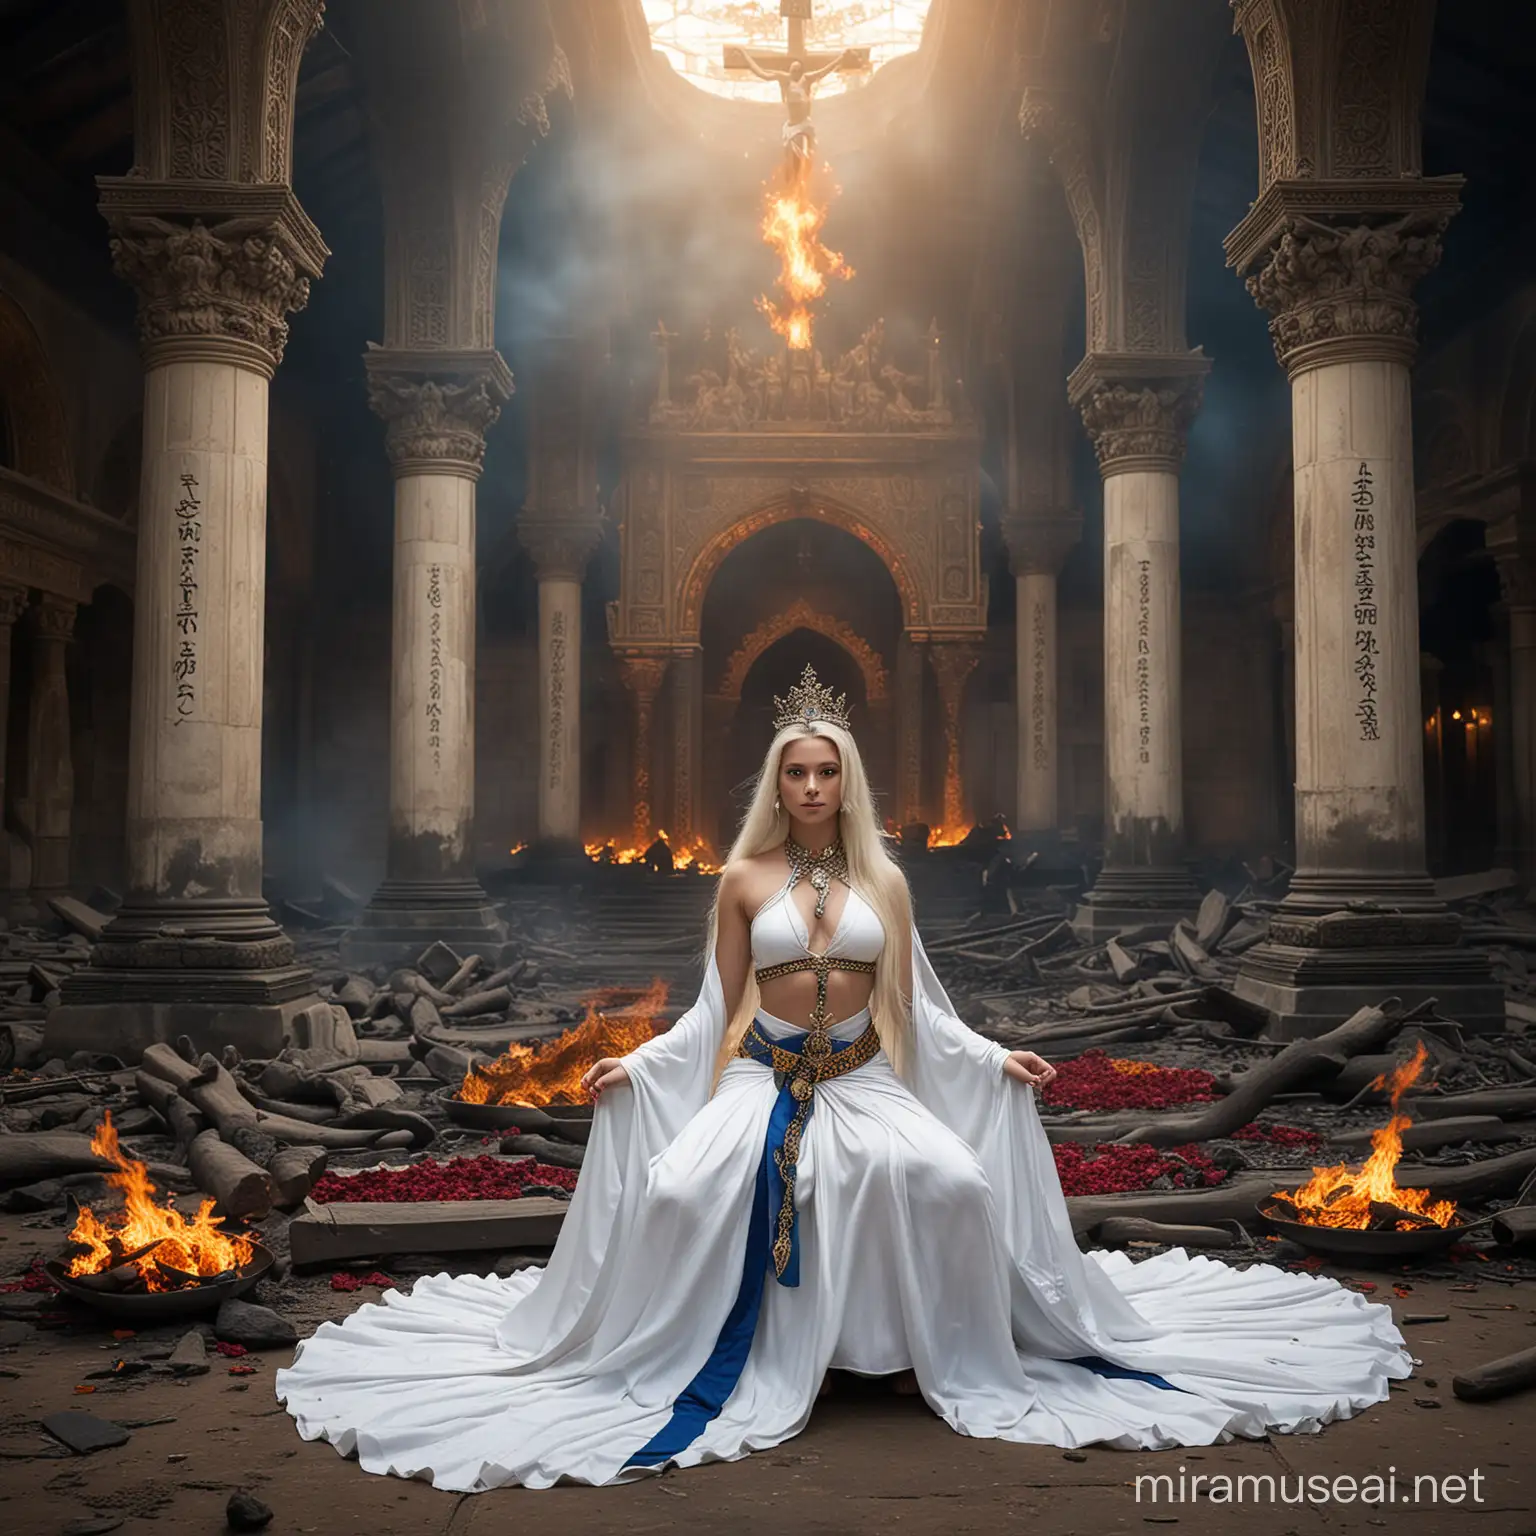 Empress Goddess in Fiery Lotus Pose Amidst Demonic Deities and Dark Valley